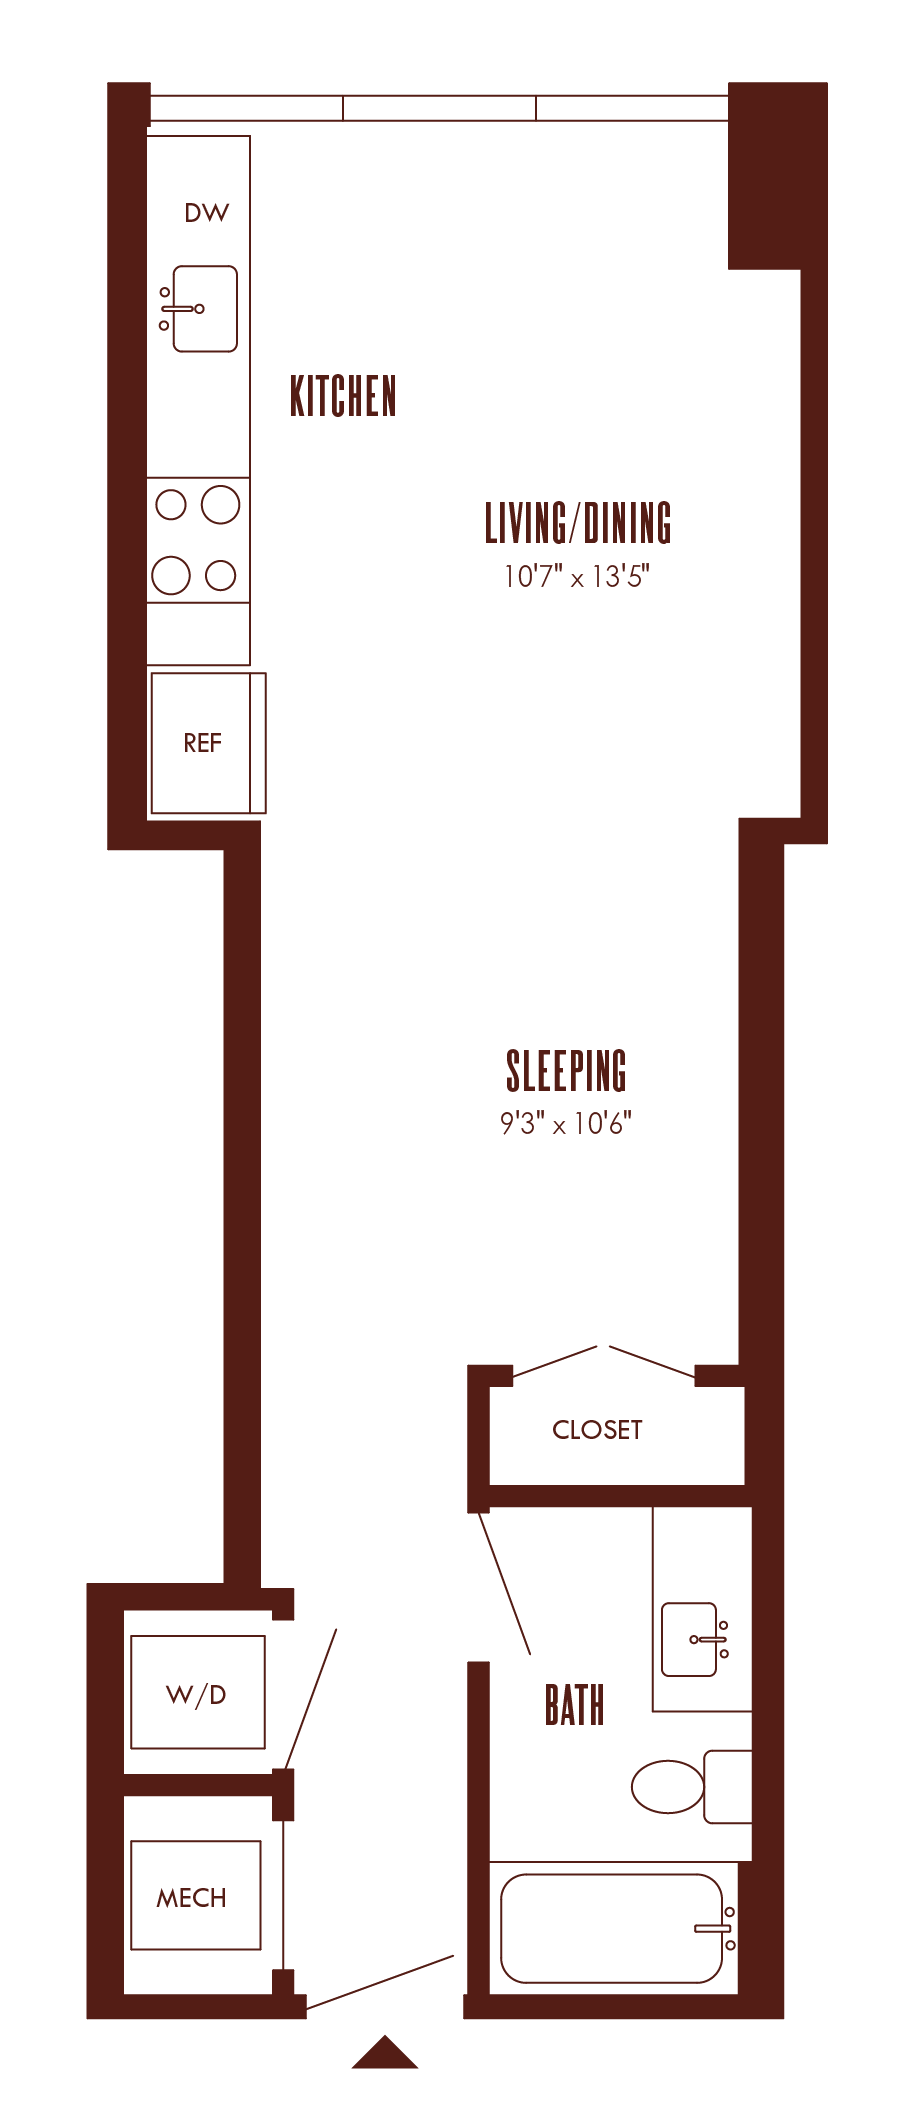 Floor Plan Image of Apartment Apt 26J